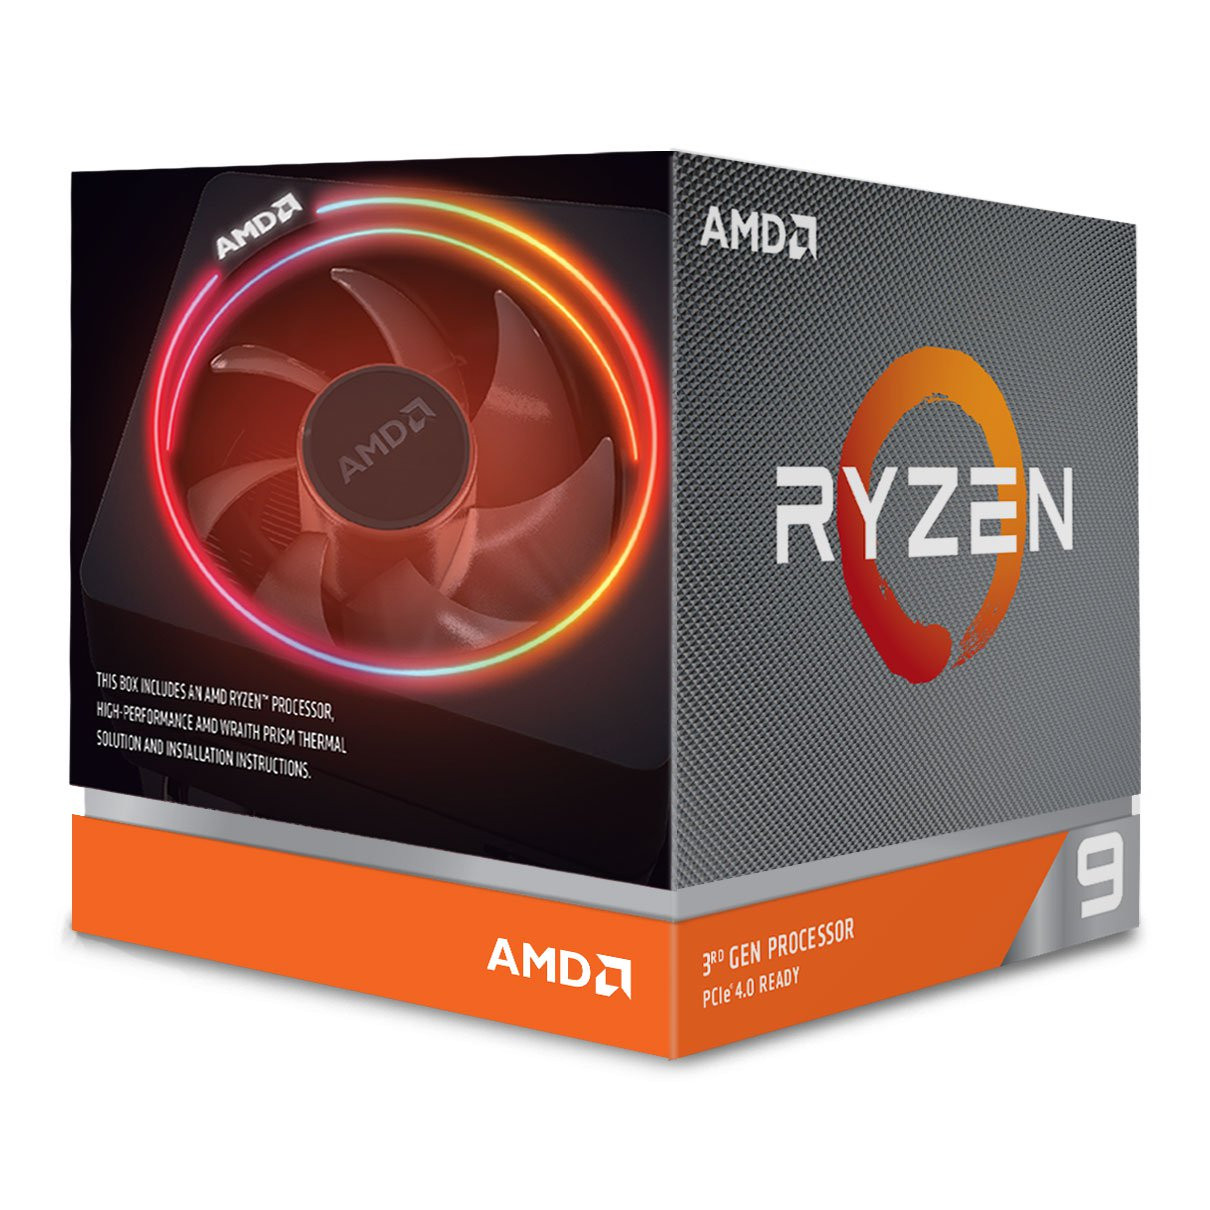 AMD Ryzen 9 3900X Processor (12 Core / 24 Thread, 64MB Cache, 4.6 GHz